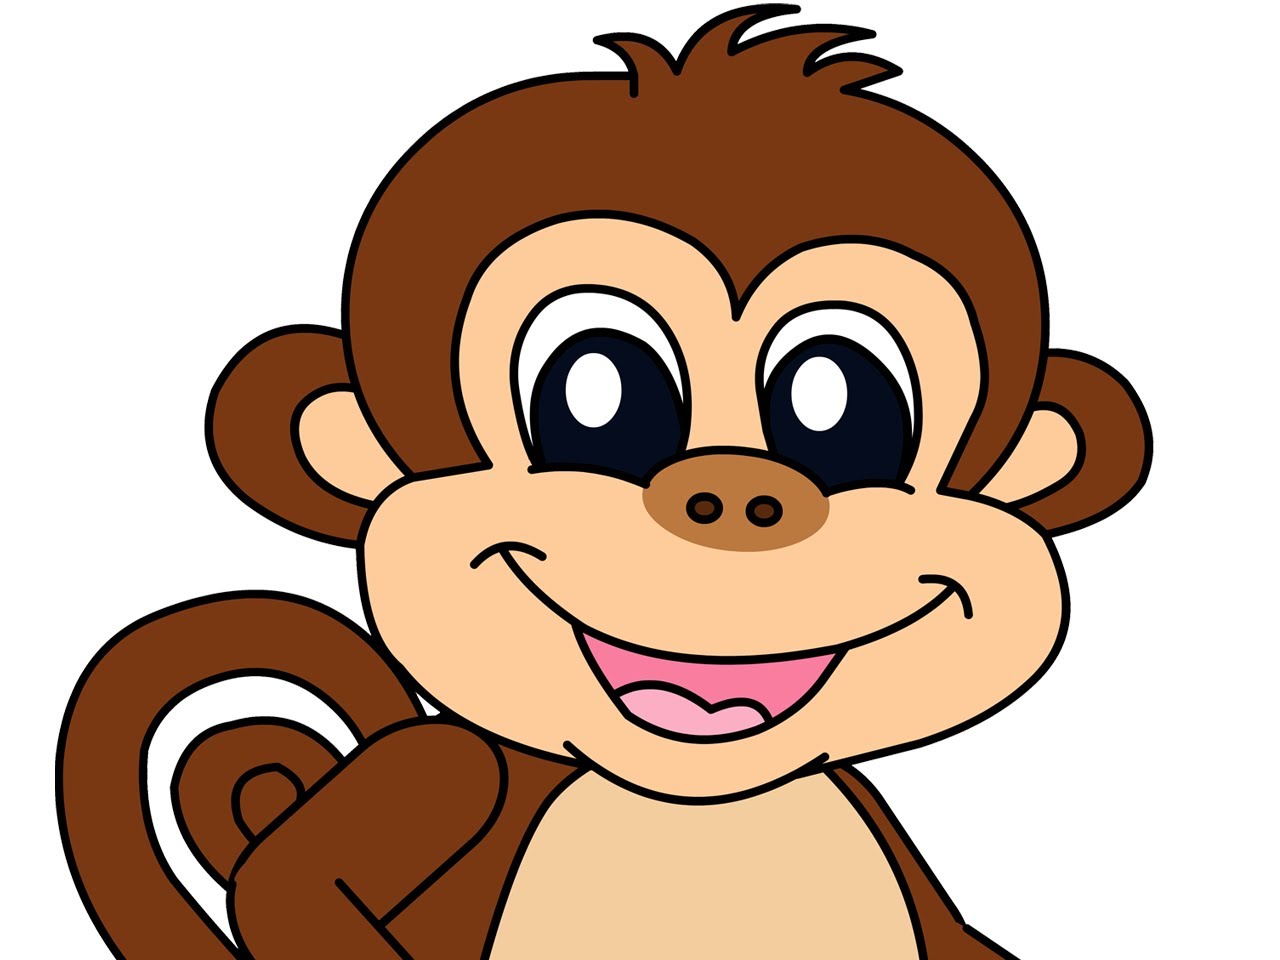 Monkey Images Cartoon | Free Download Clip Art | Free Clip Art ...